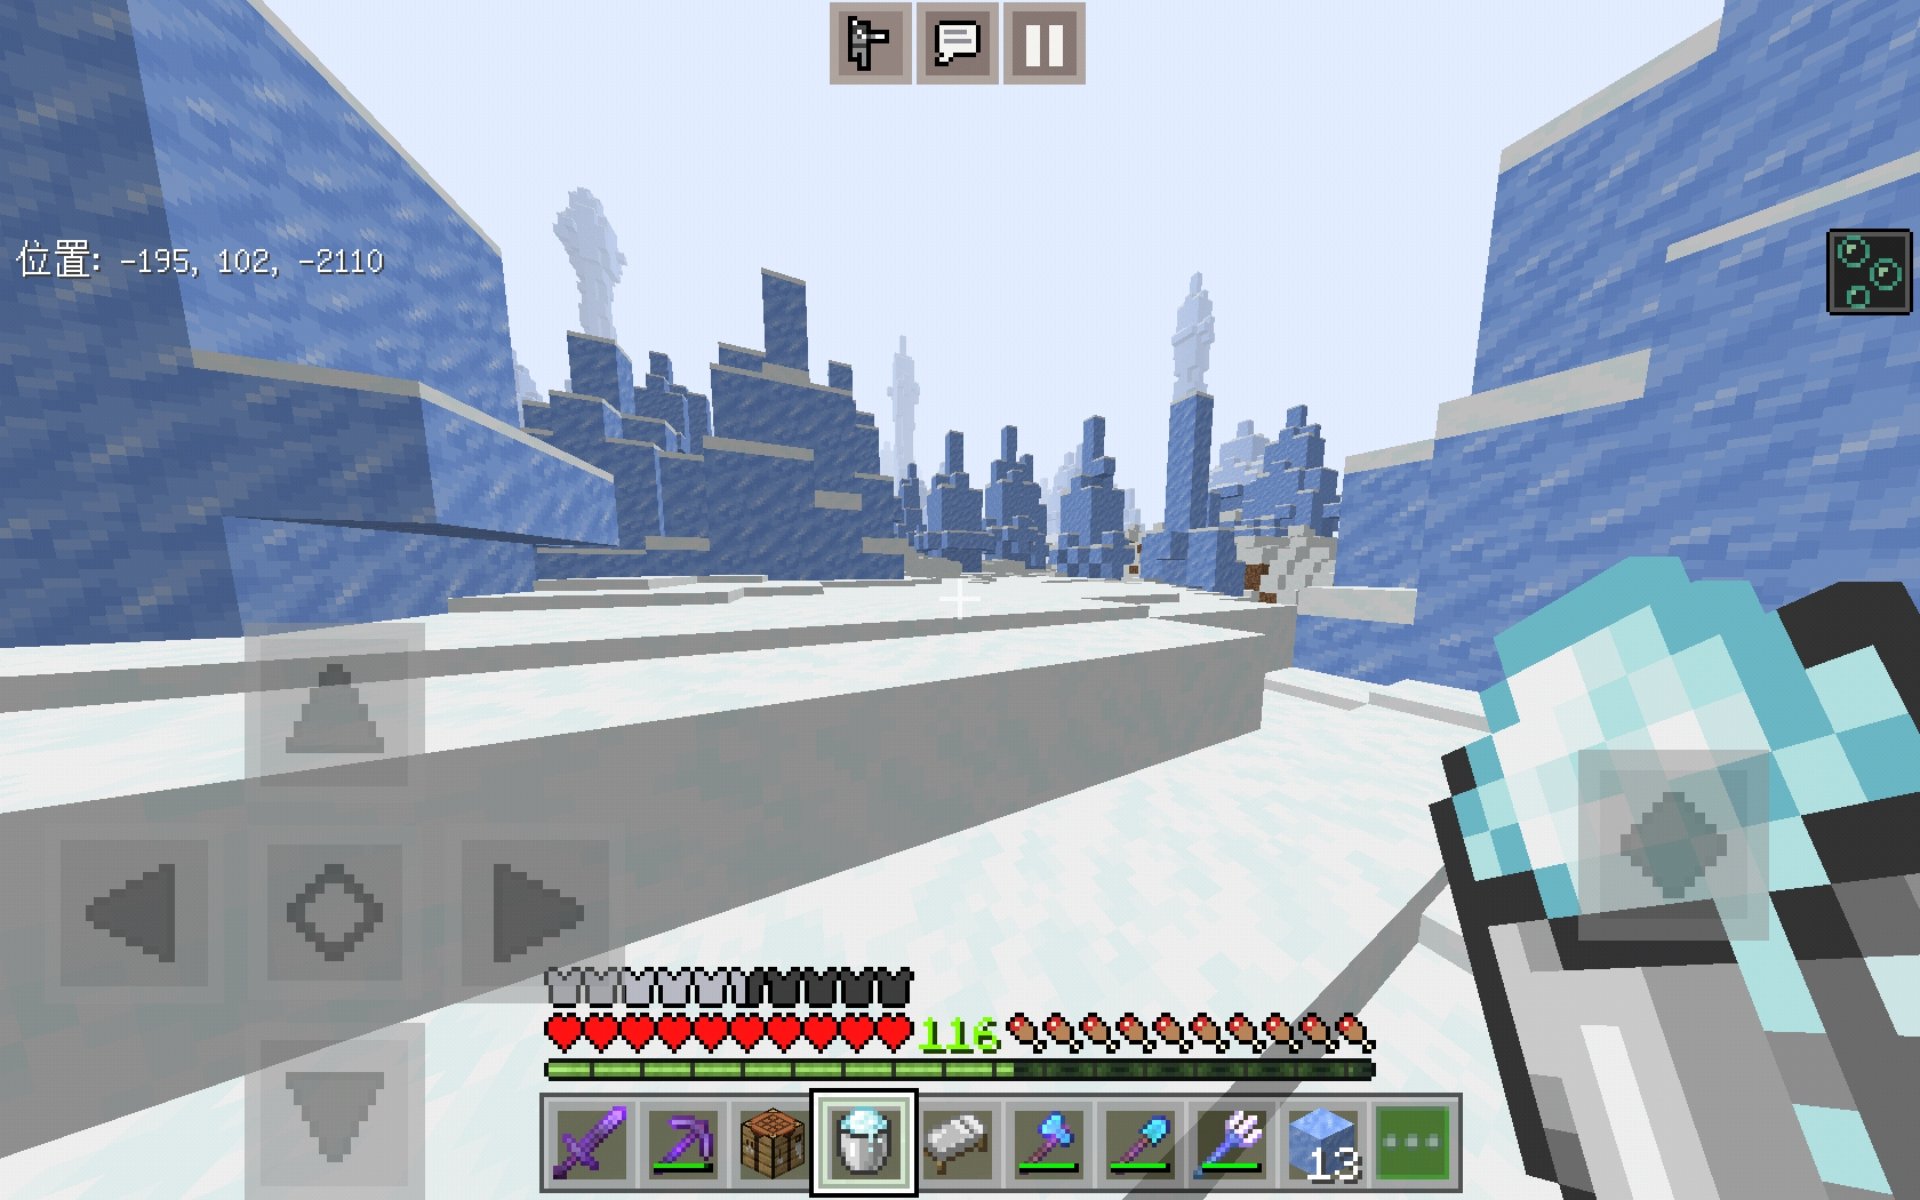 Kyosyo 樹氷バイオーム発見した画像 樹氷って地味にレアだよね Minecraft T Co Vczeu8knxm Twitter